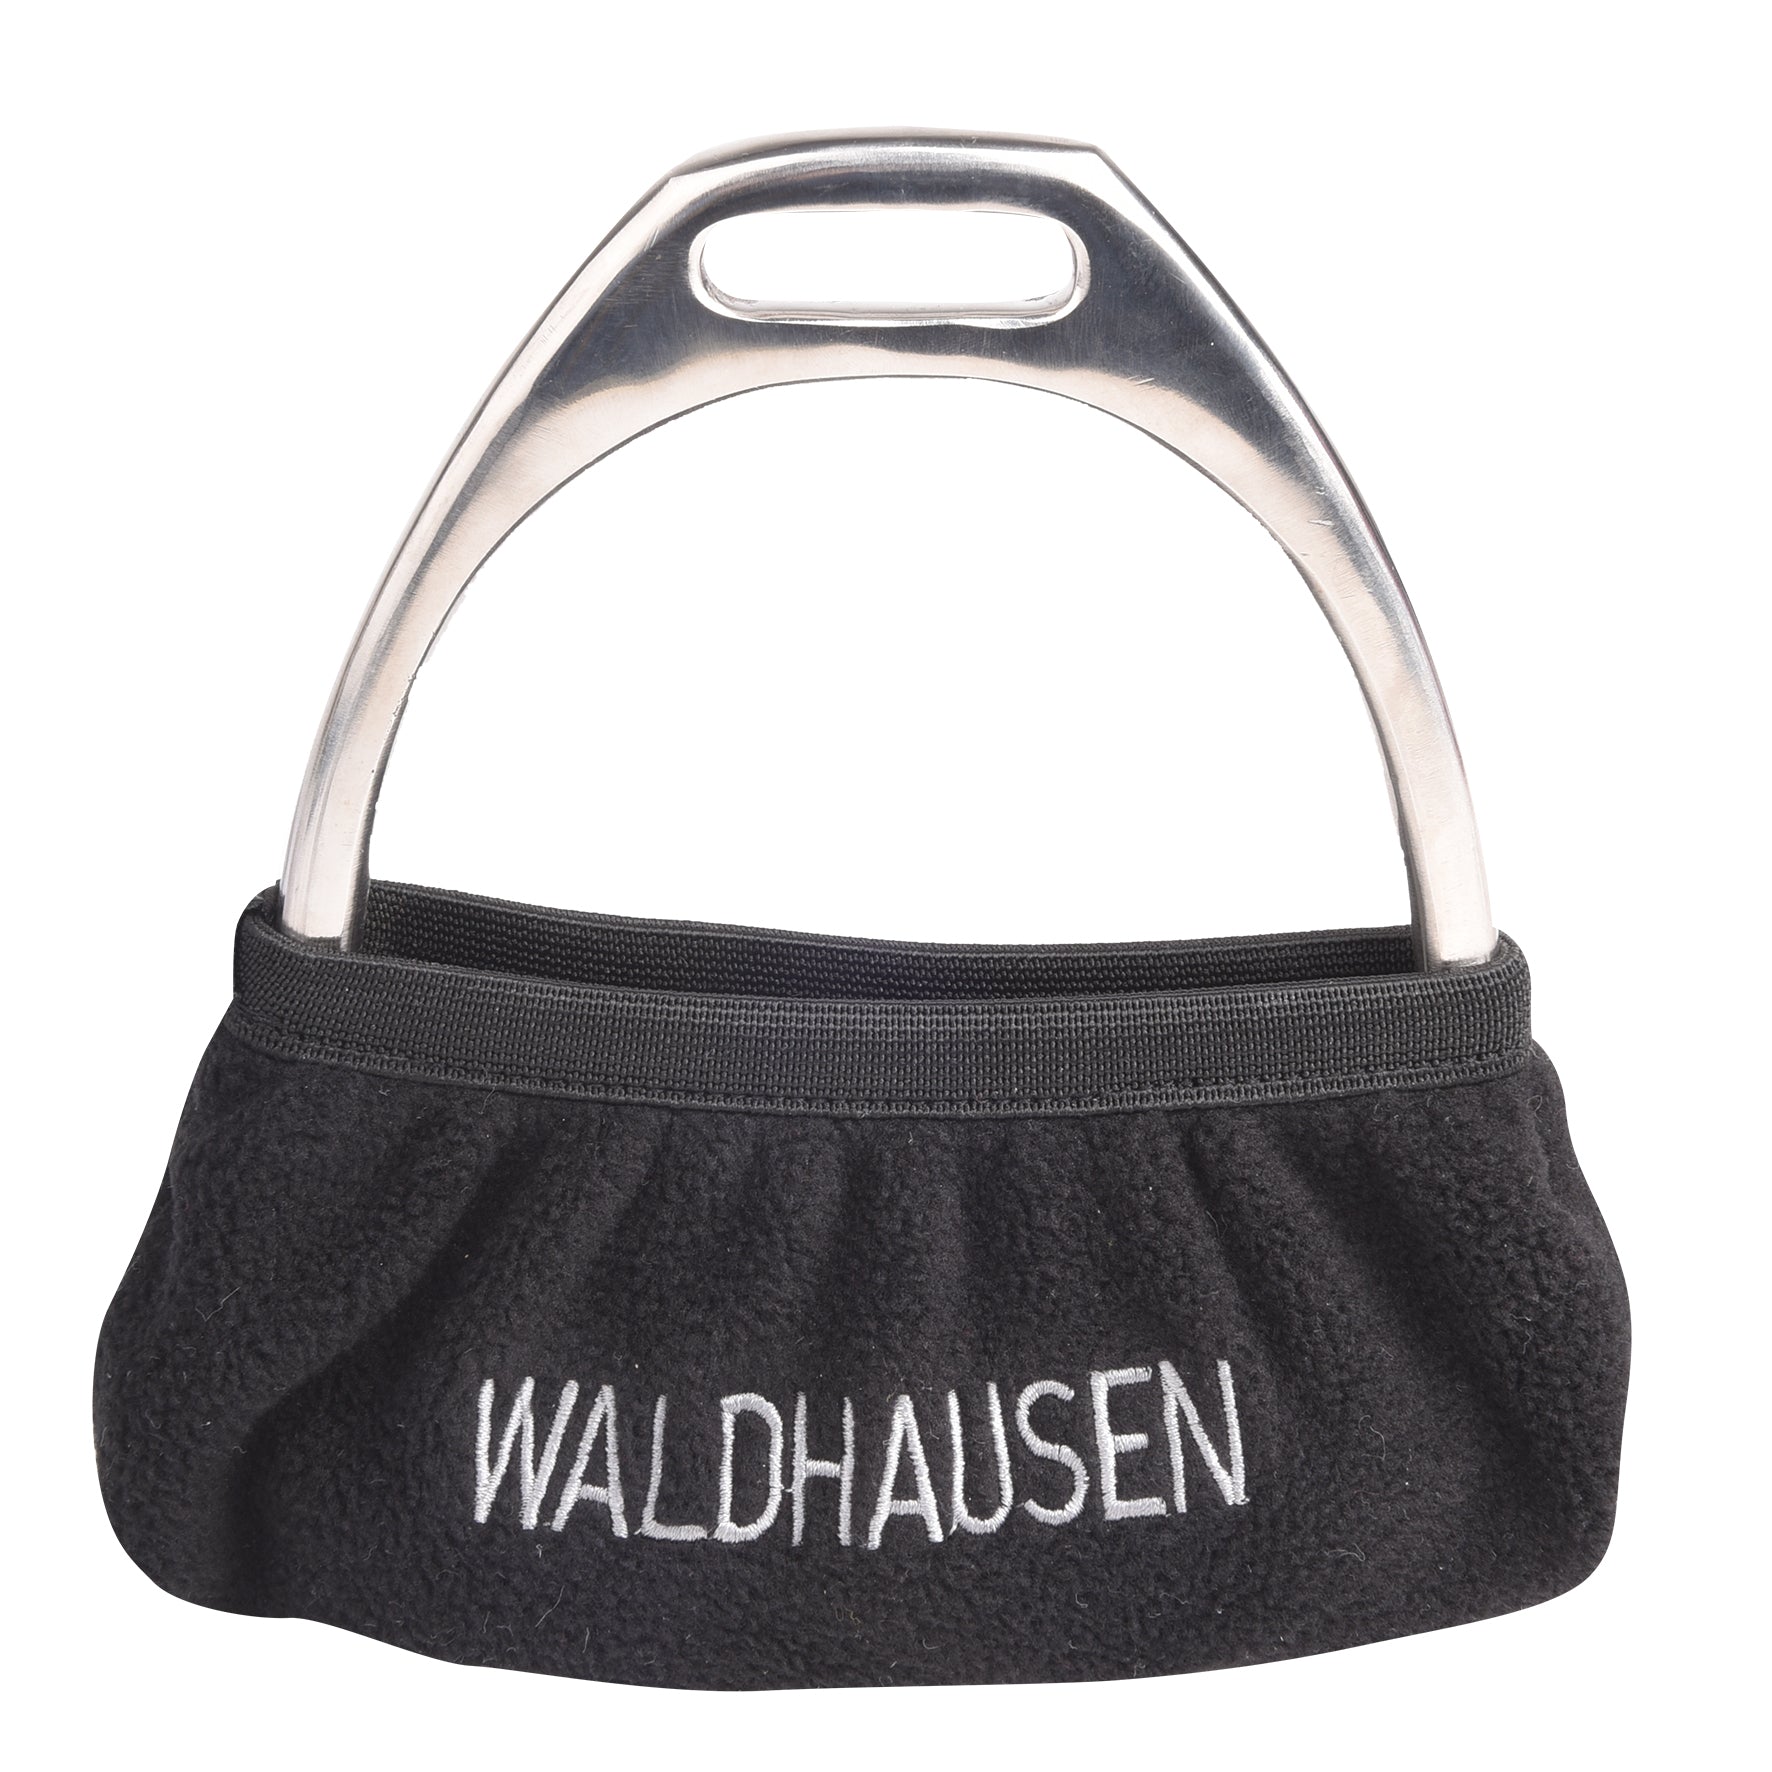 Waldhausen Stirrup Cover Black Fleece with Elastic Top